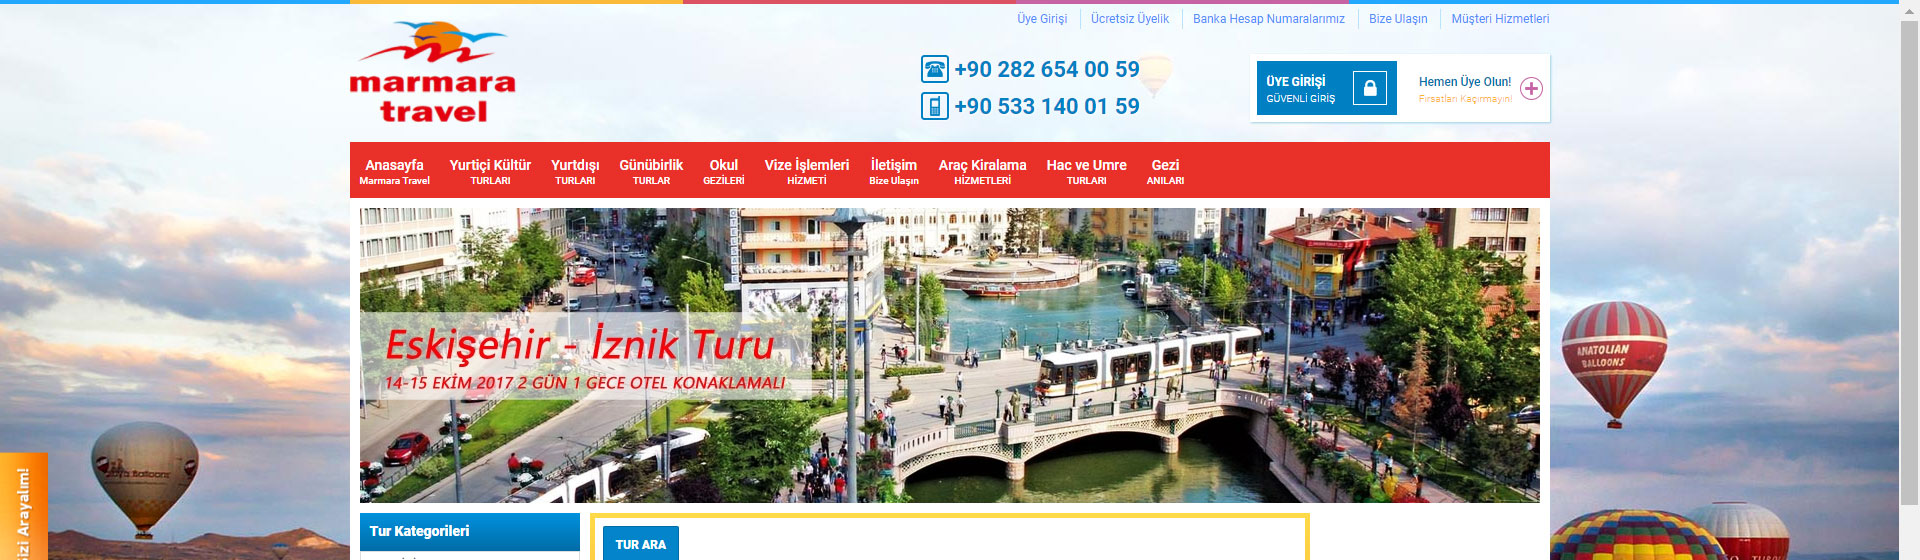 Marmara Travel - Tekirdağ